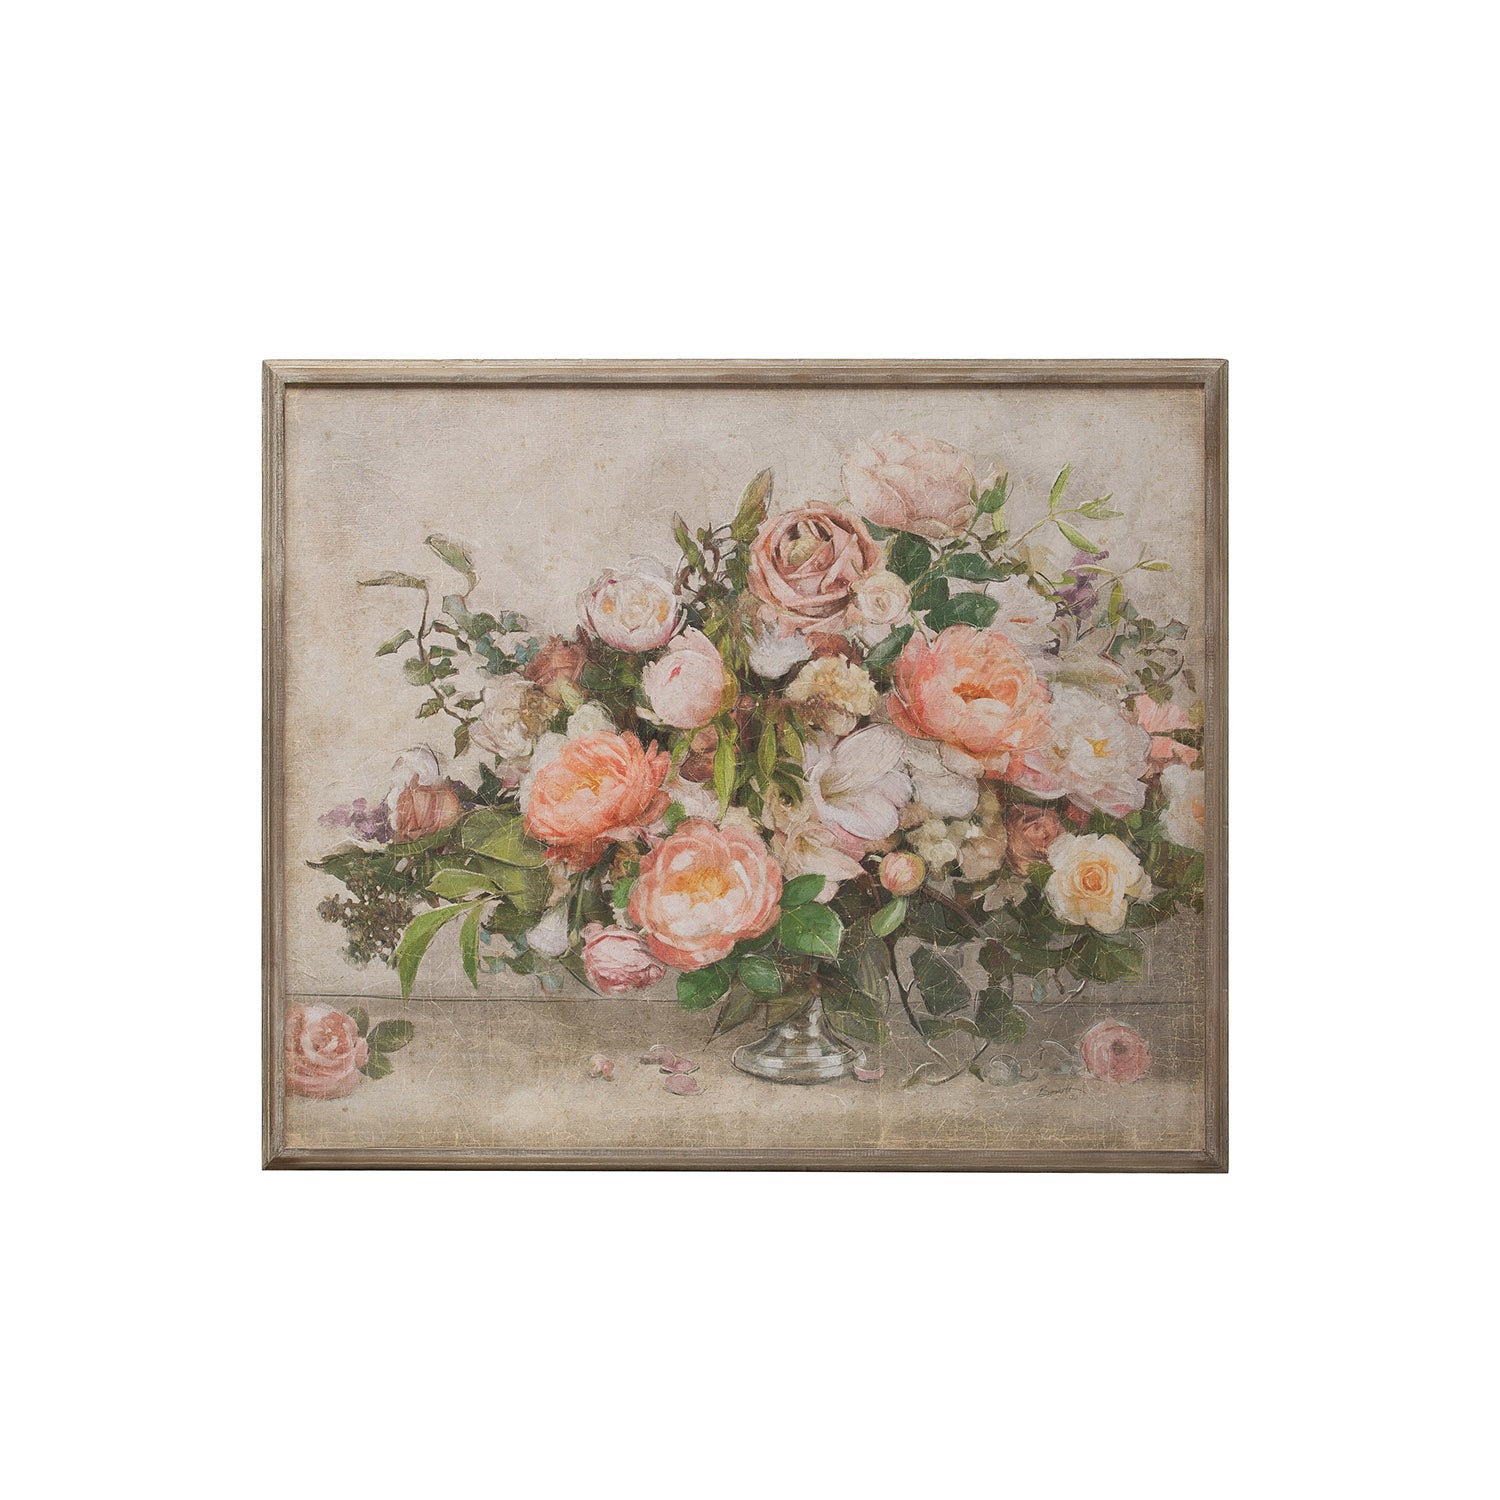 37-1/4"W x 31-1/2"H Wood Framed Wall Décor w/ Flower Bouquet ©